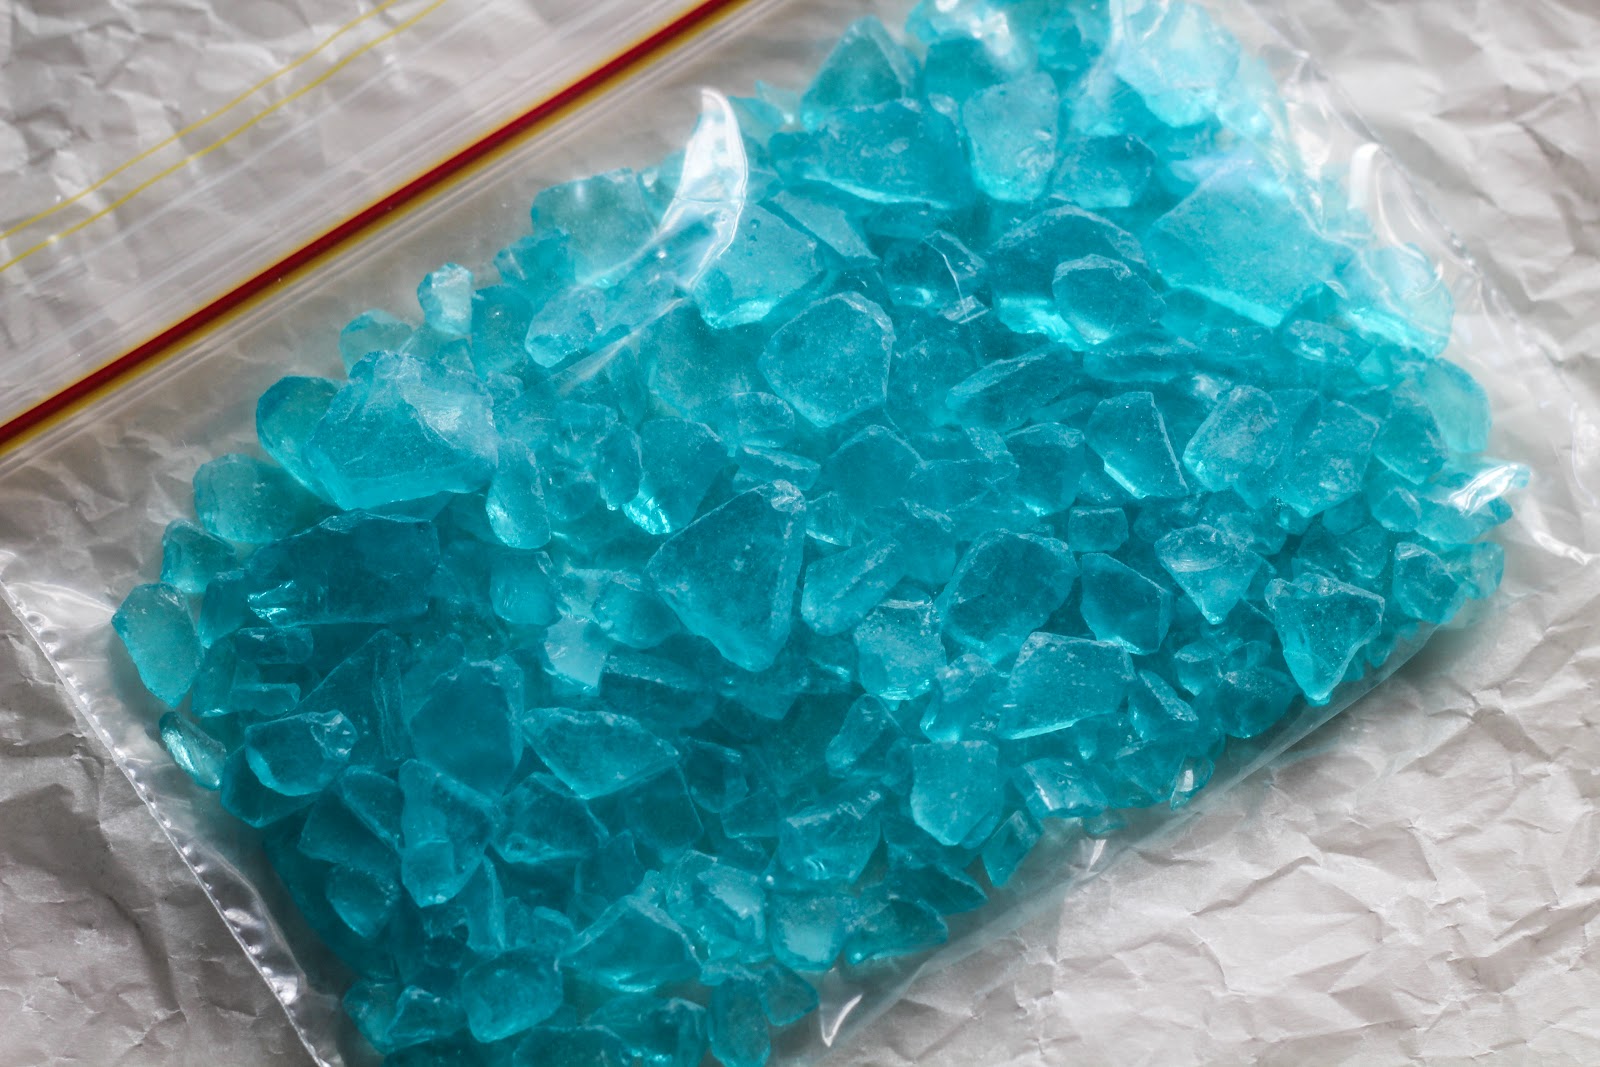 Blue crystal meth for sale